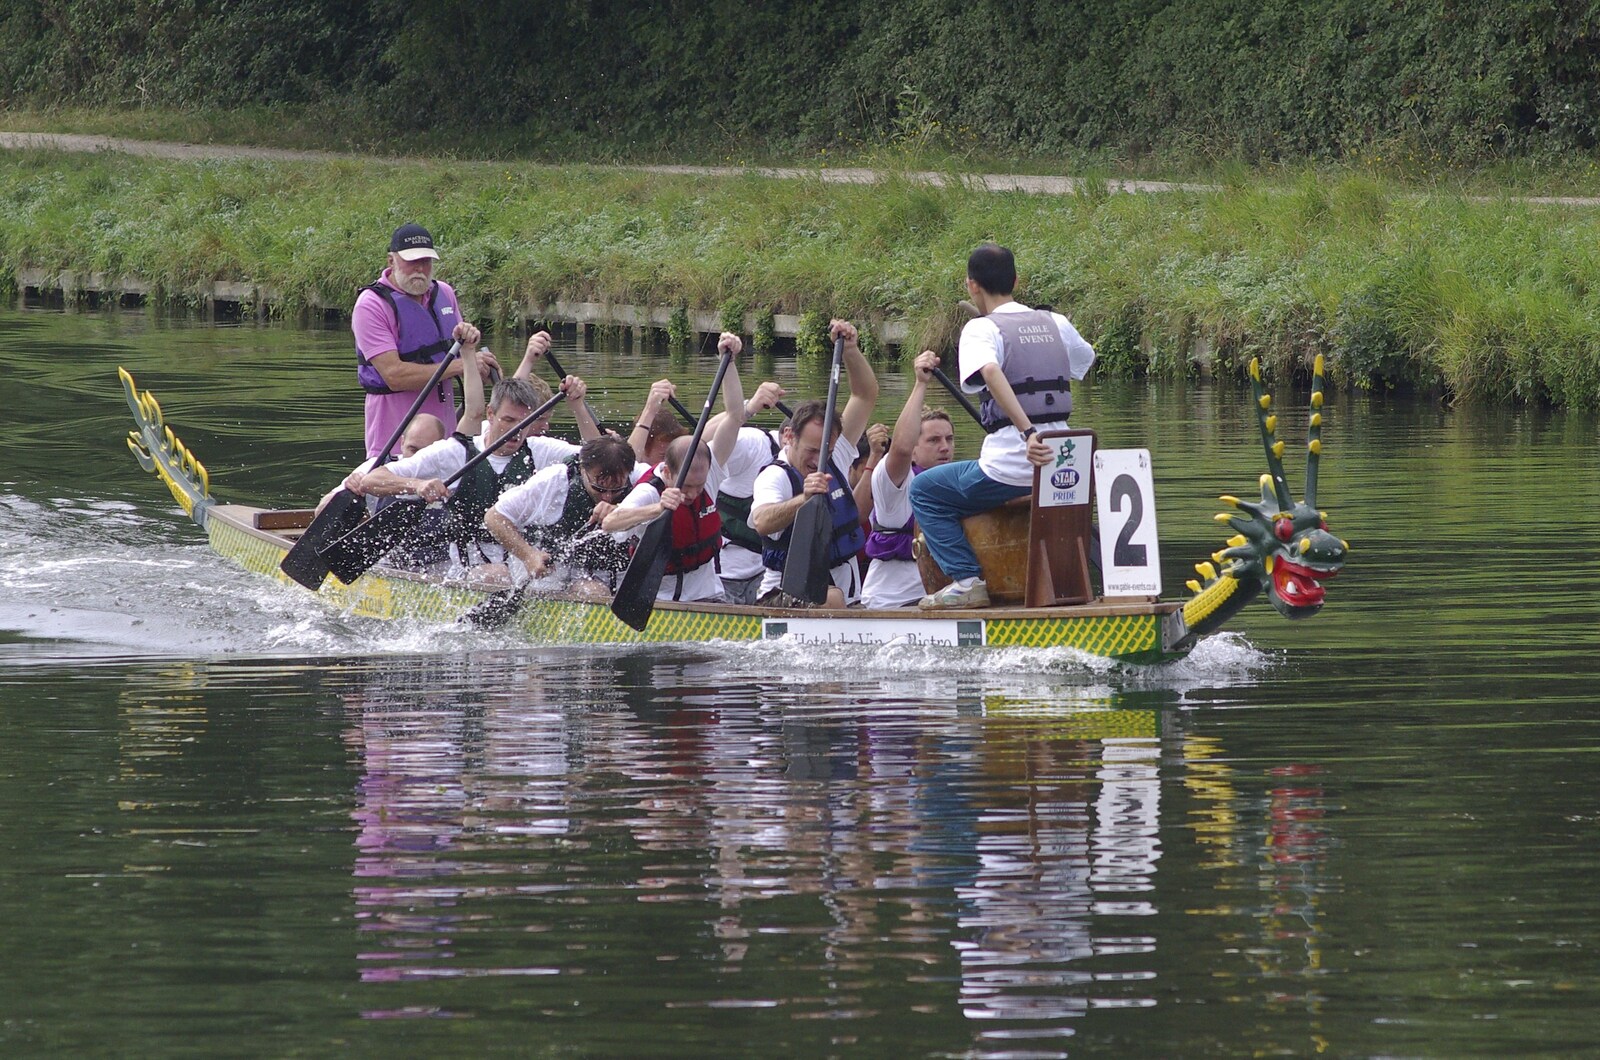 Qualcomm's Dragon-Boat Racing, Fen Ditton, Cambridge - 8th September 2007: Qualcomm paddles frantically